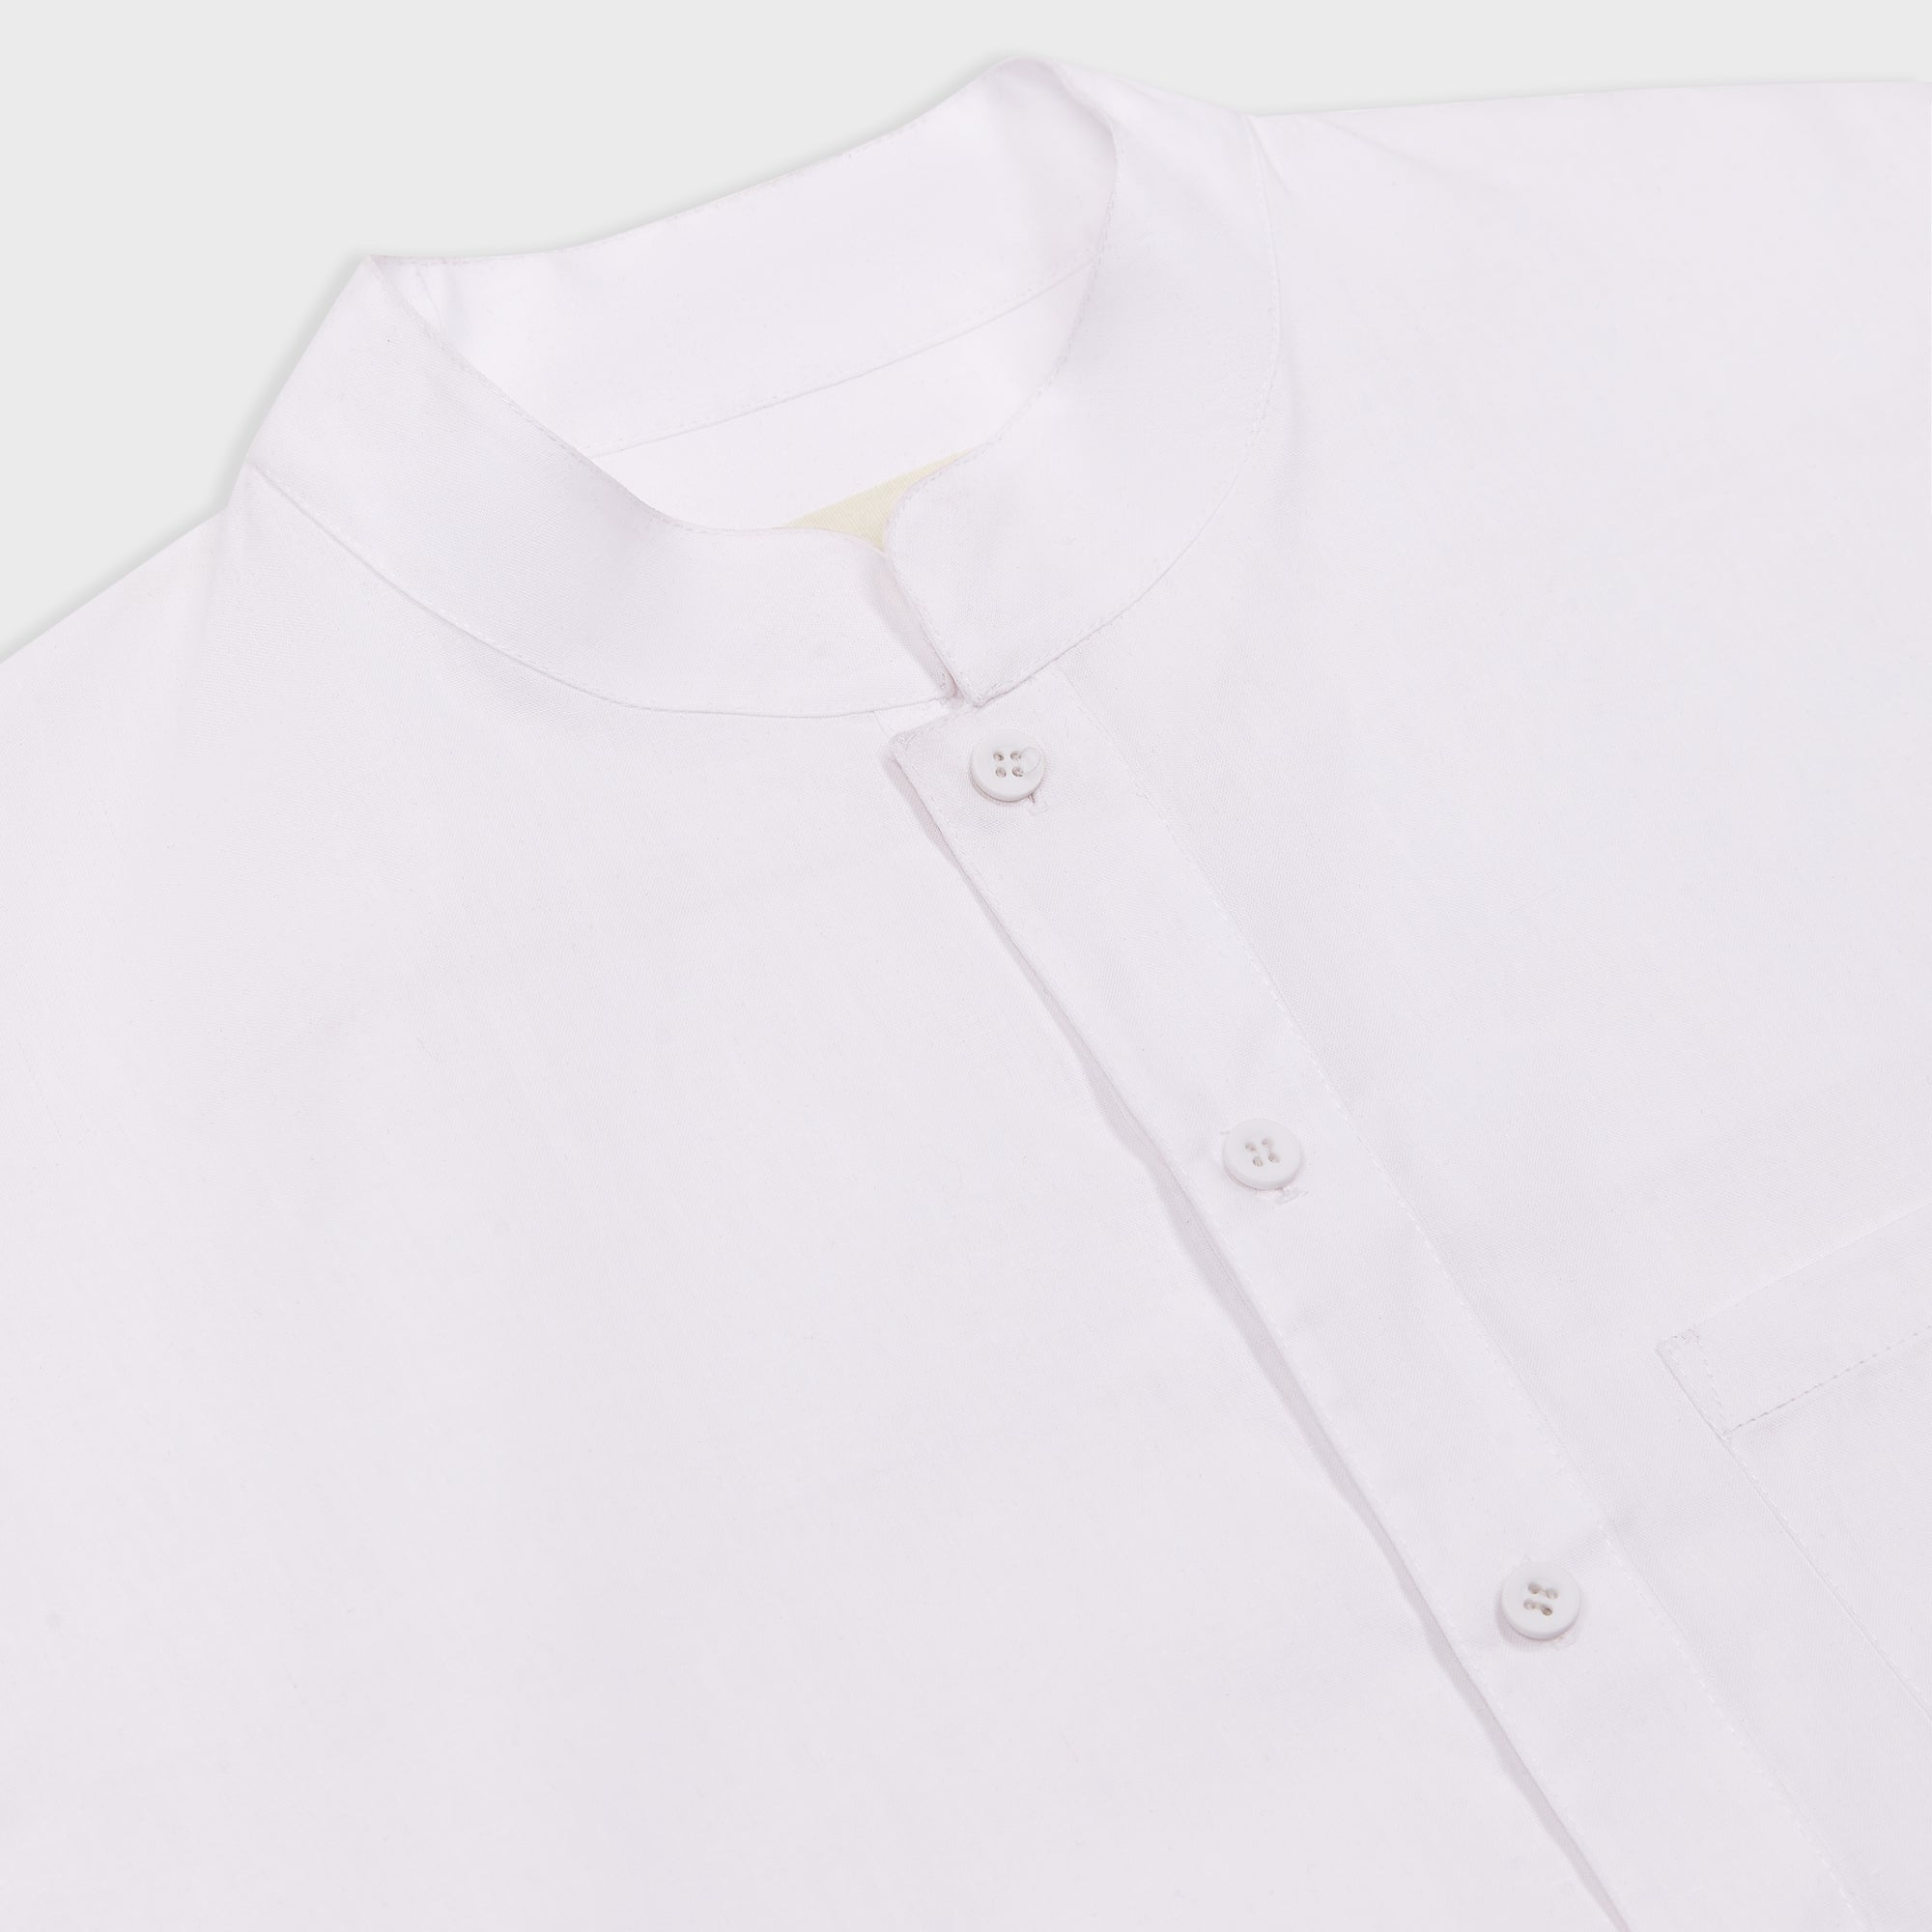 Priesthood Button up Shirt